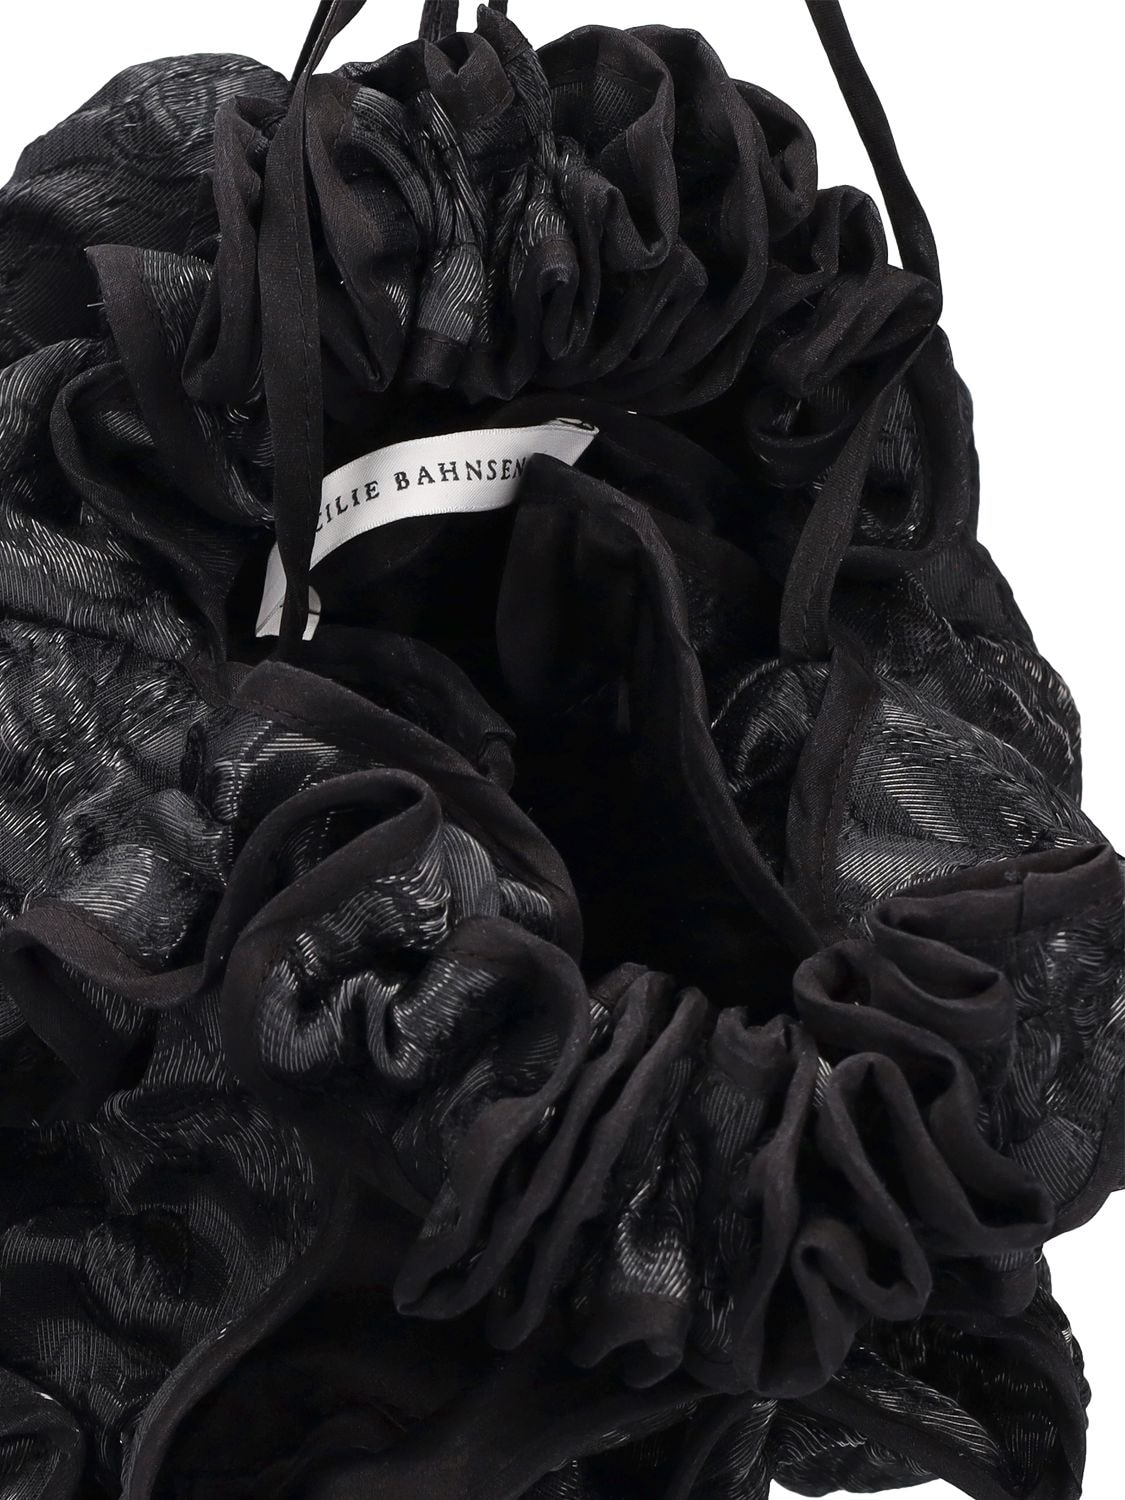 Sofie Luna Jacquard Top Handle Bag In Black